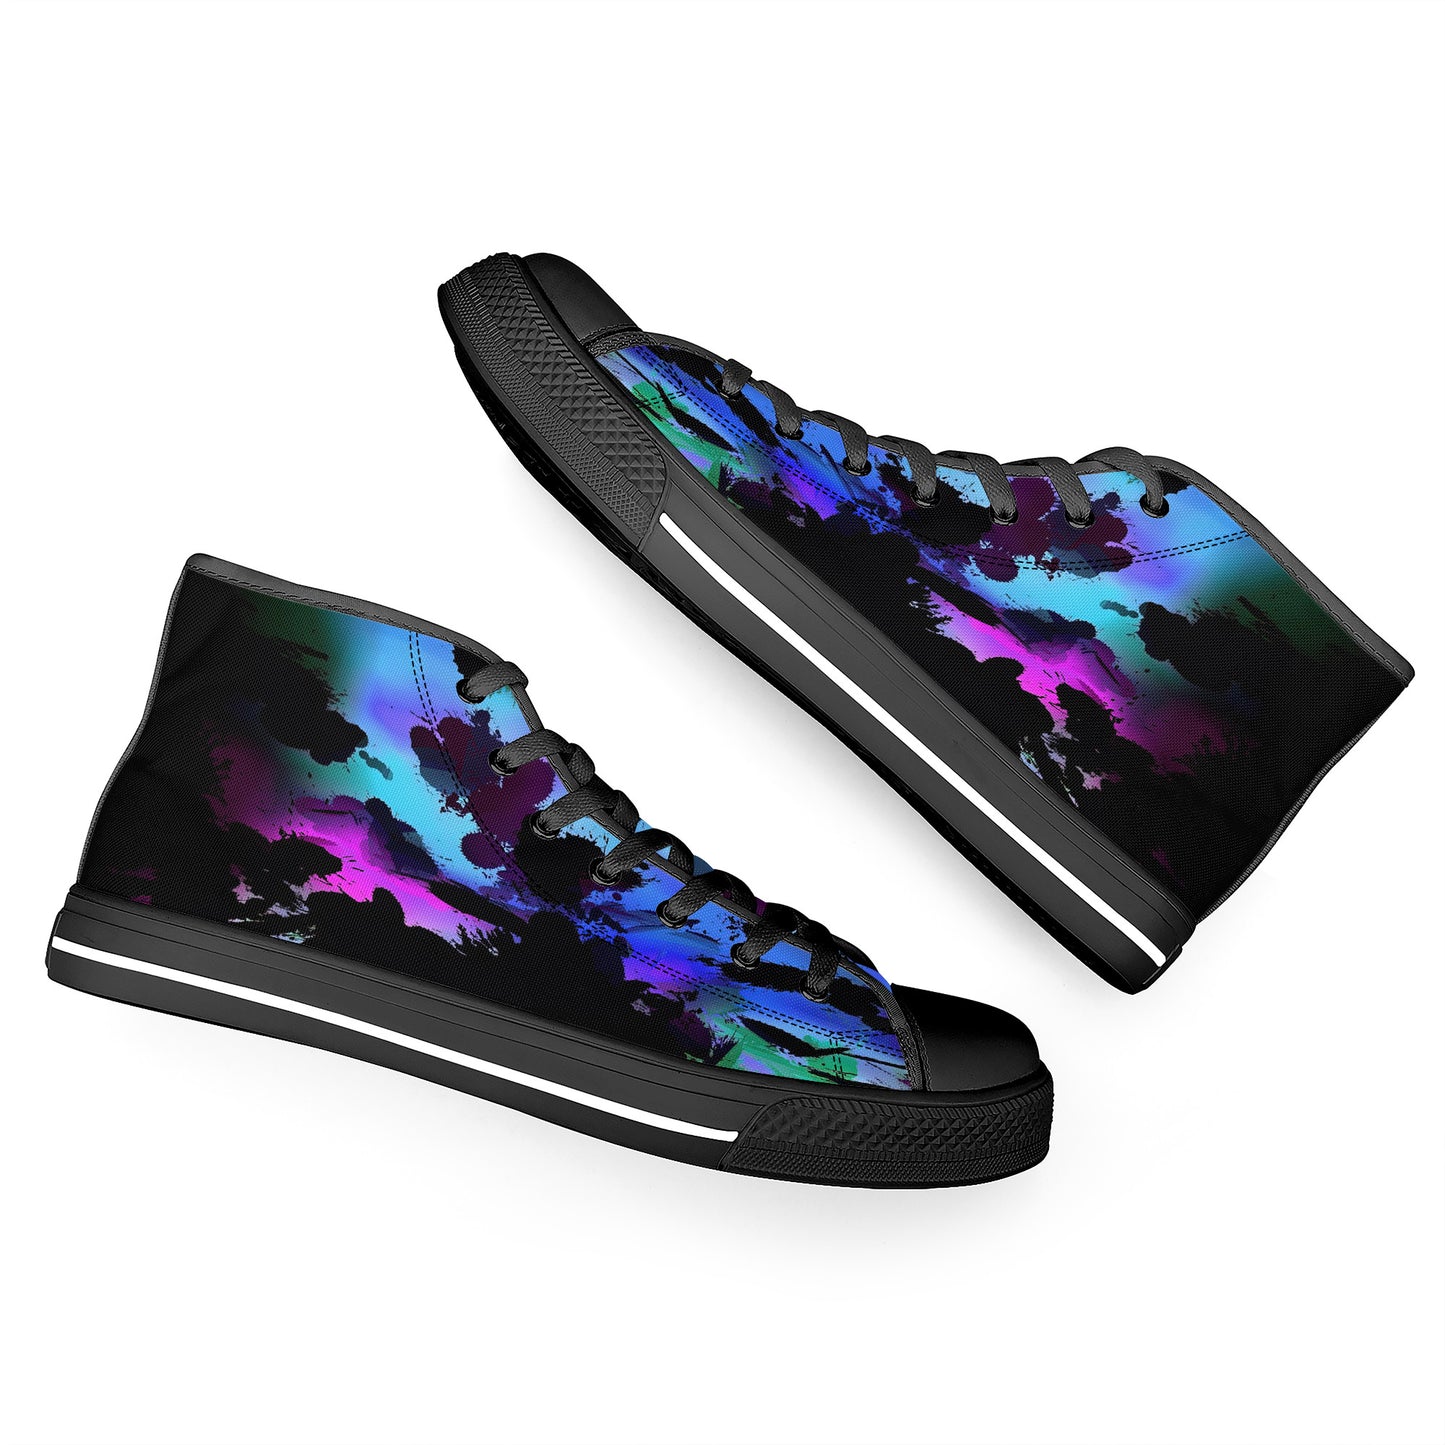 Color Implosion High-Top Canvas Shoes- Black